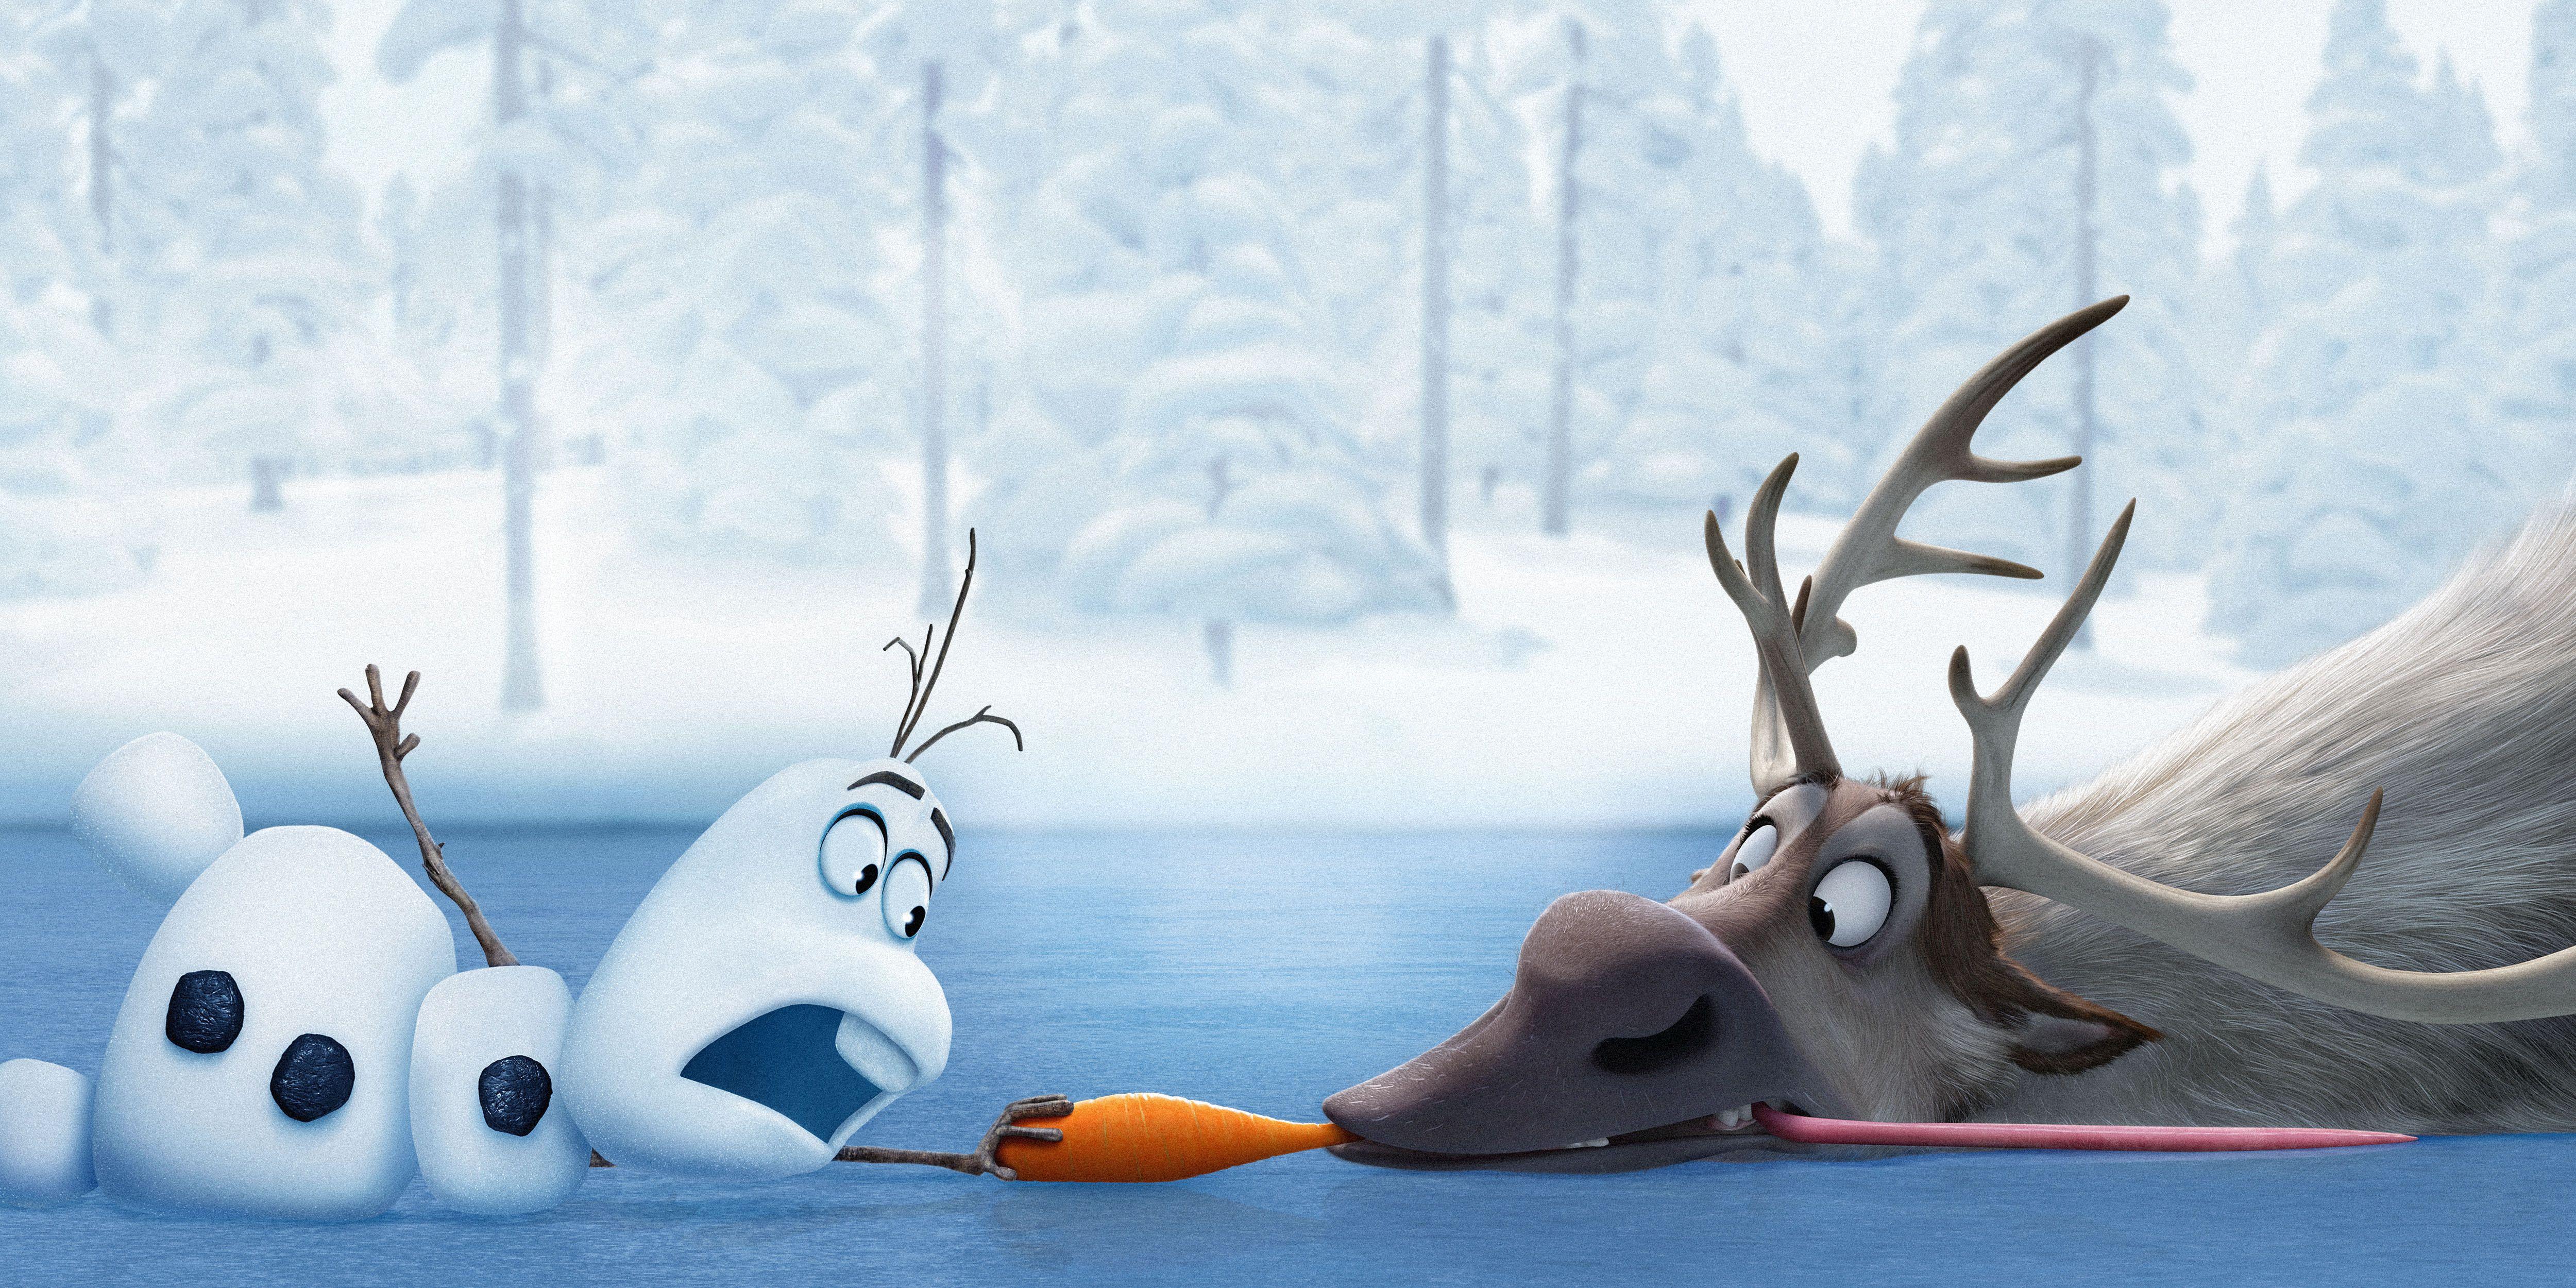 Frozen movie snowman and the elk 4k Ultra HD